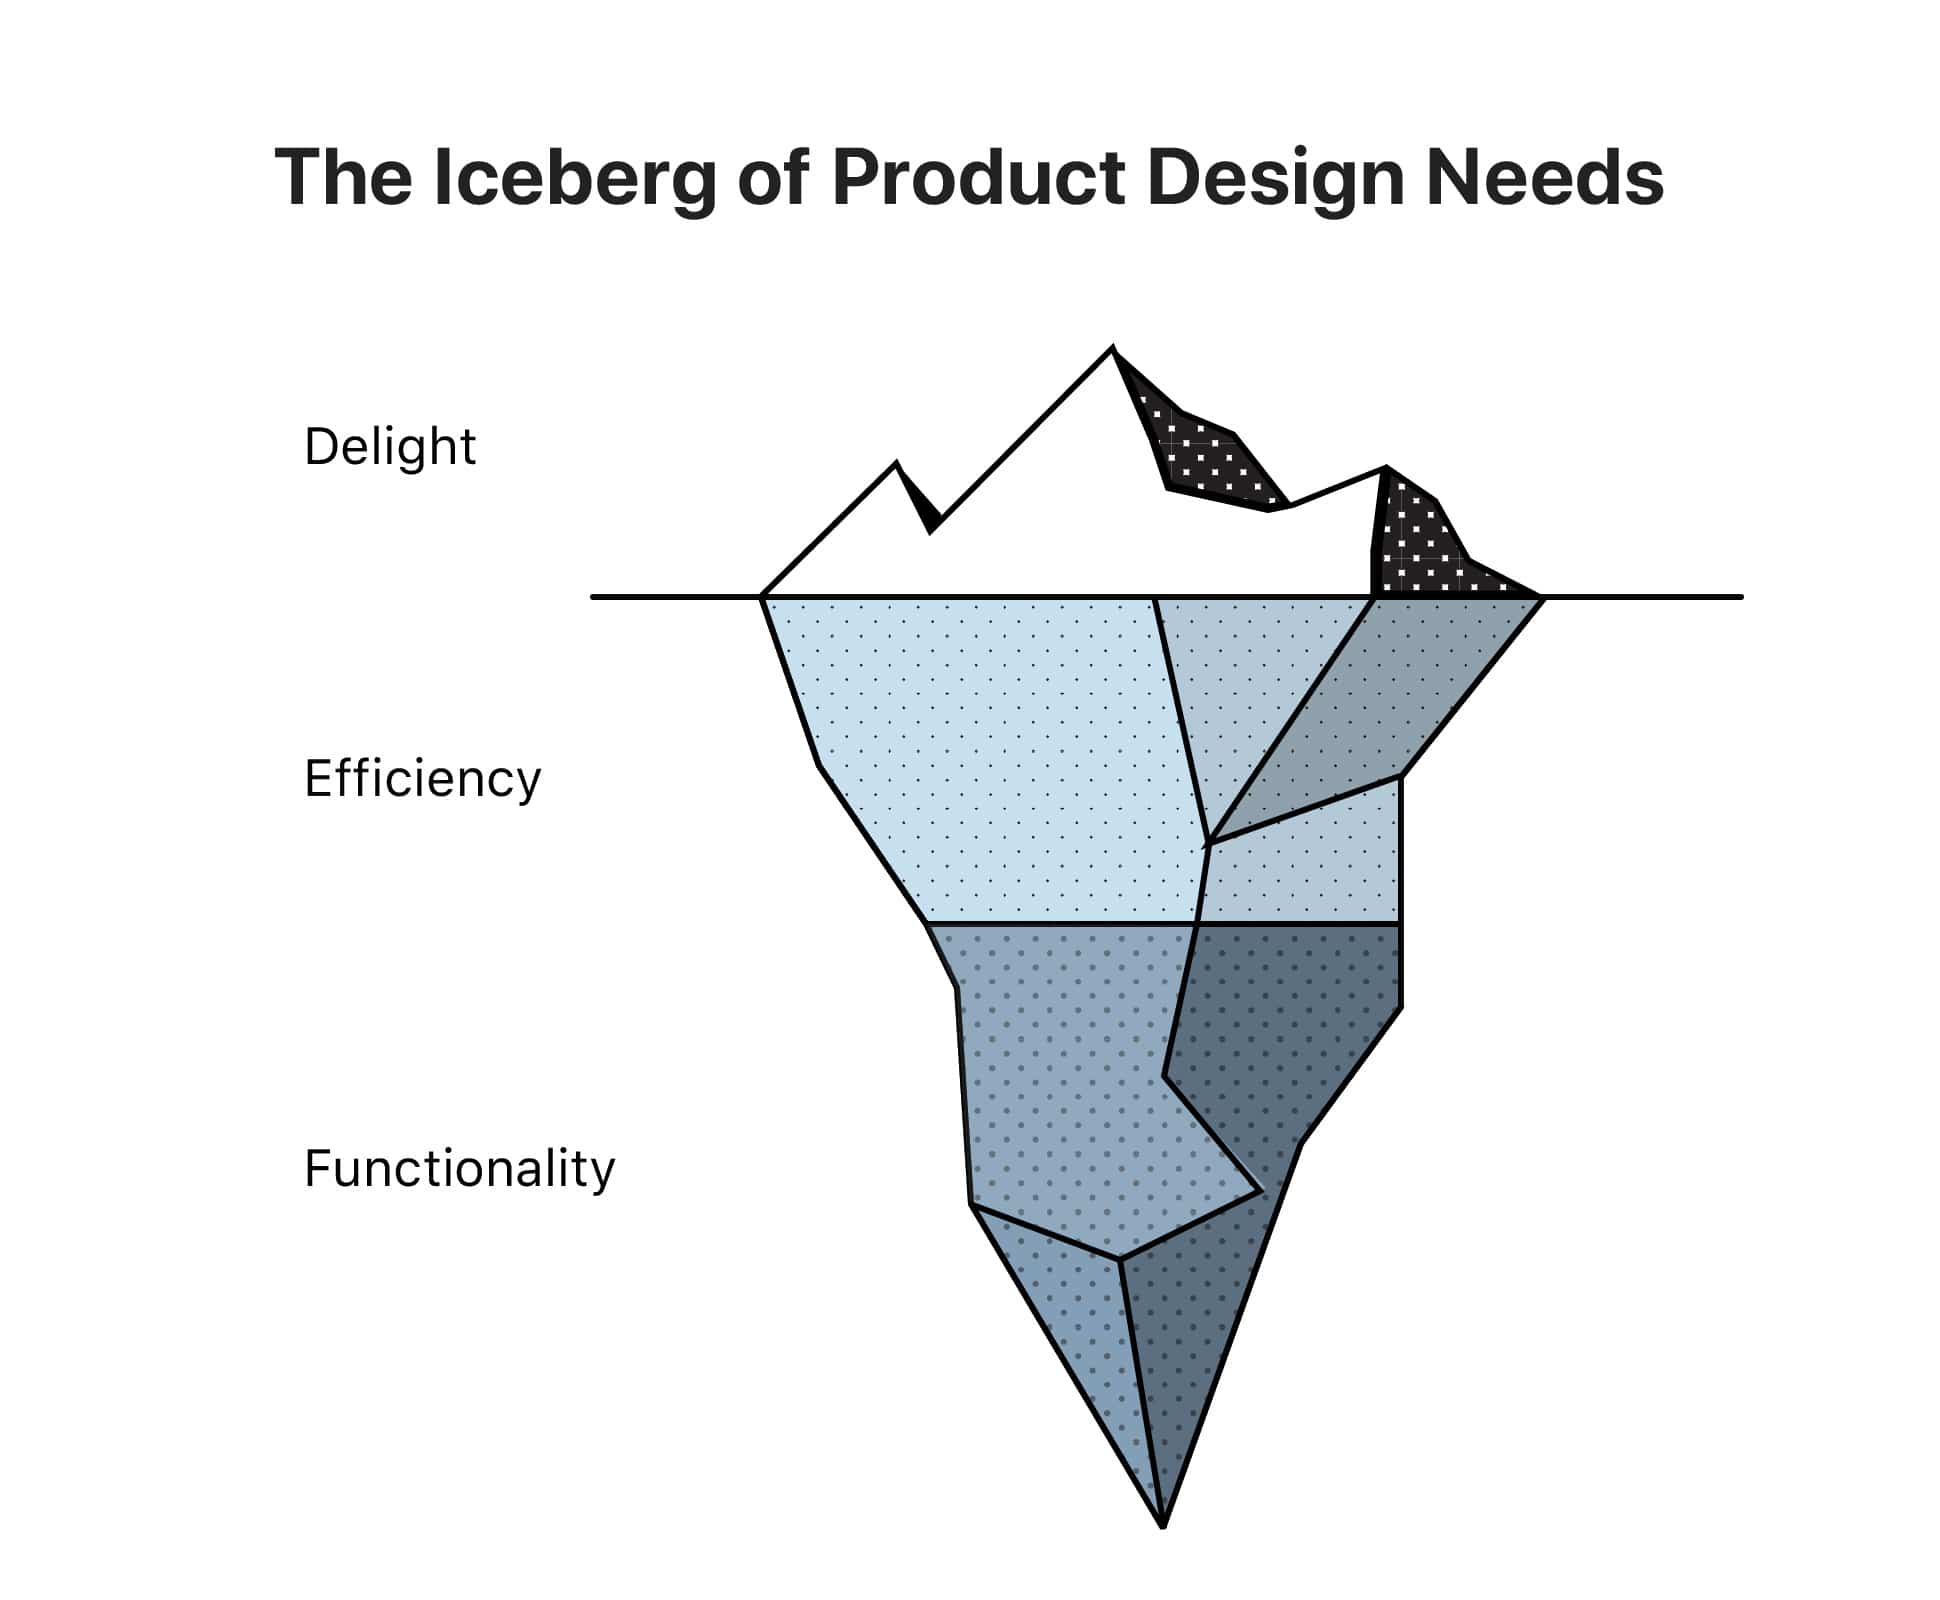 The Iceberg of Product Design Needs